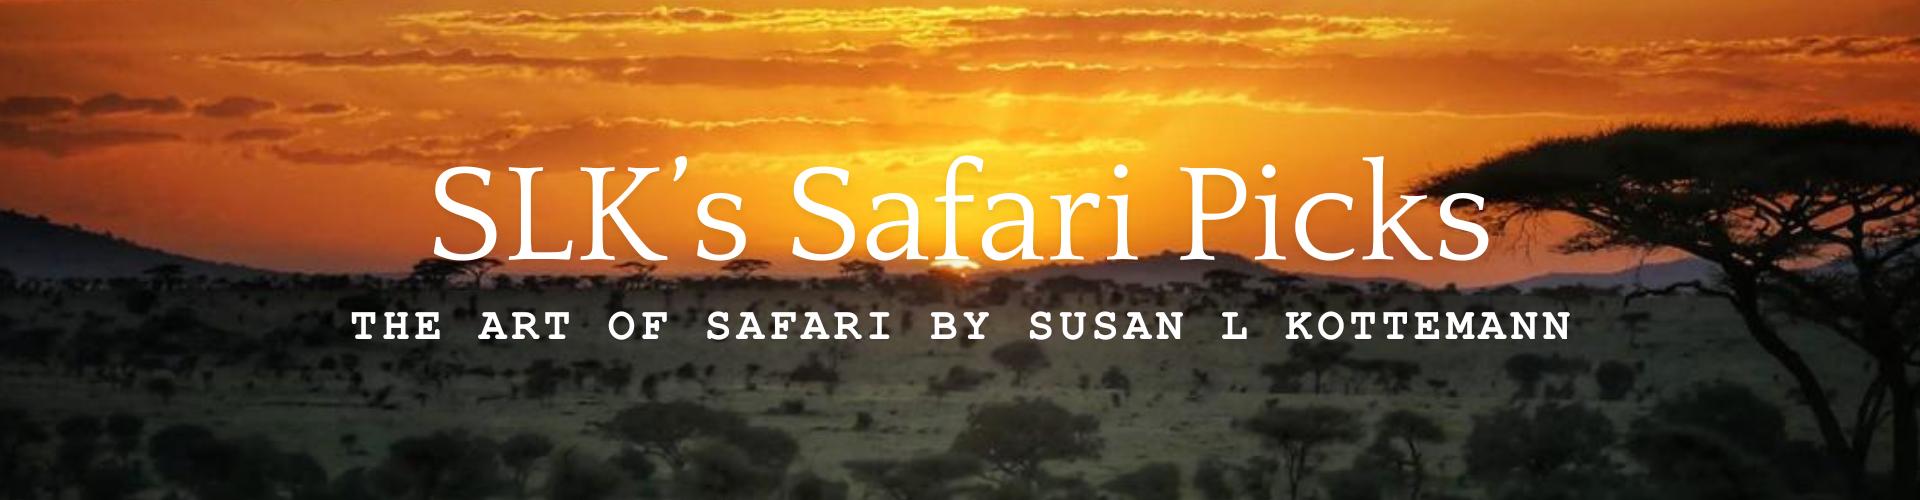 African Sunset scene. Susan's Safari Picks. The Art of Safari by Susan L Kottemann